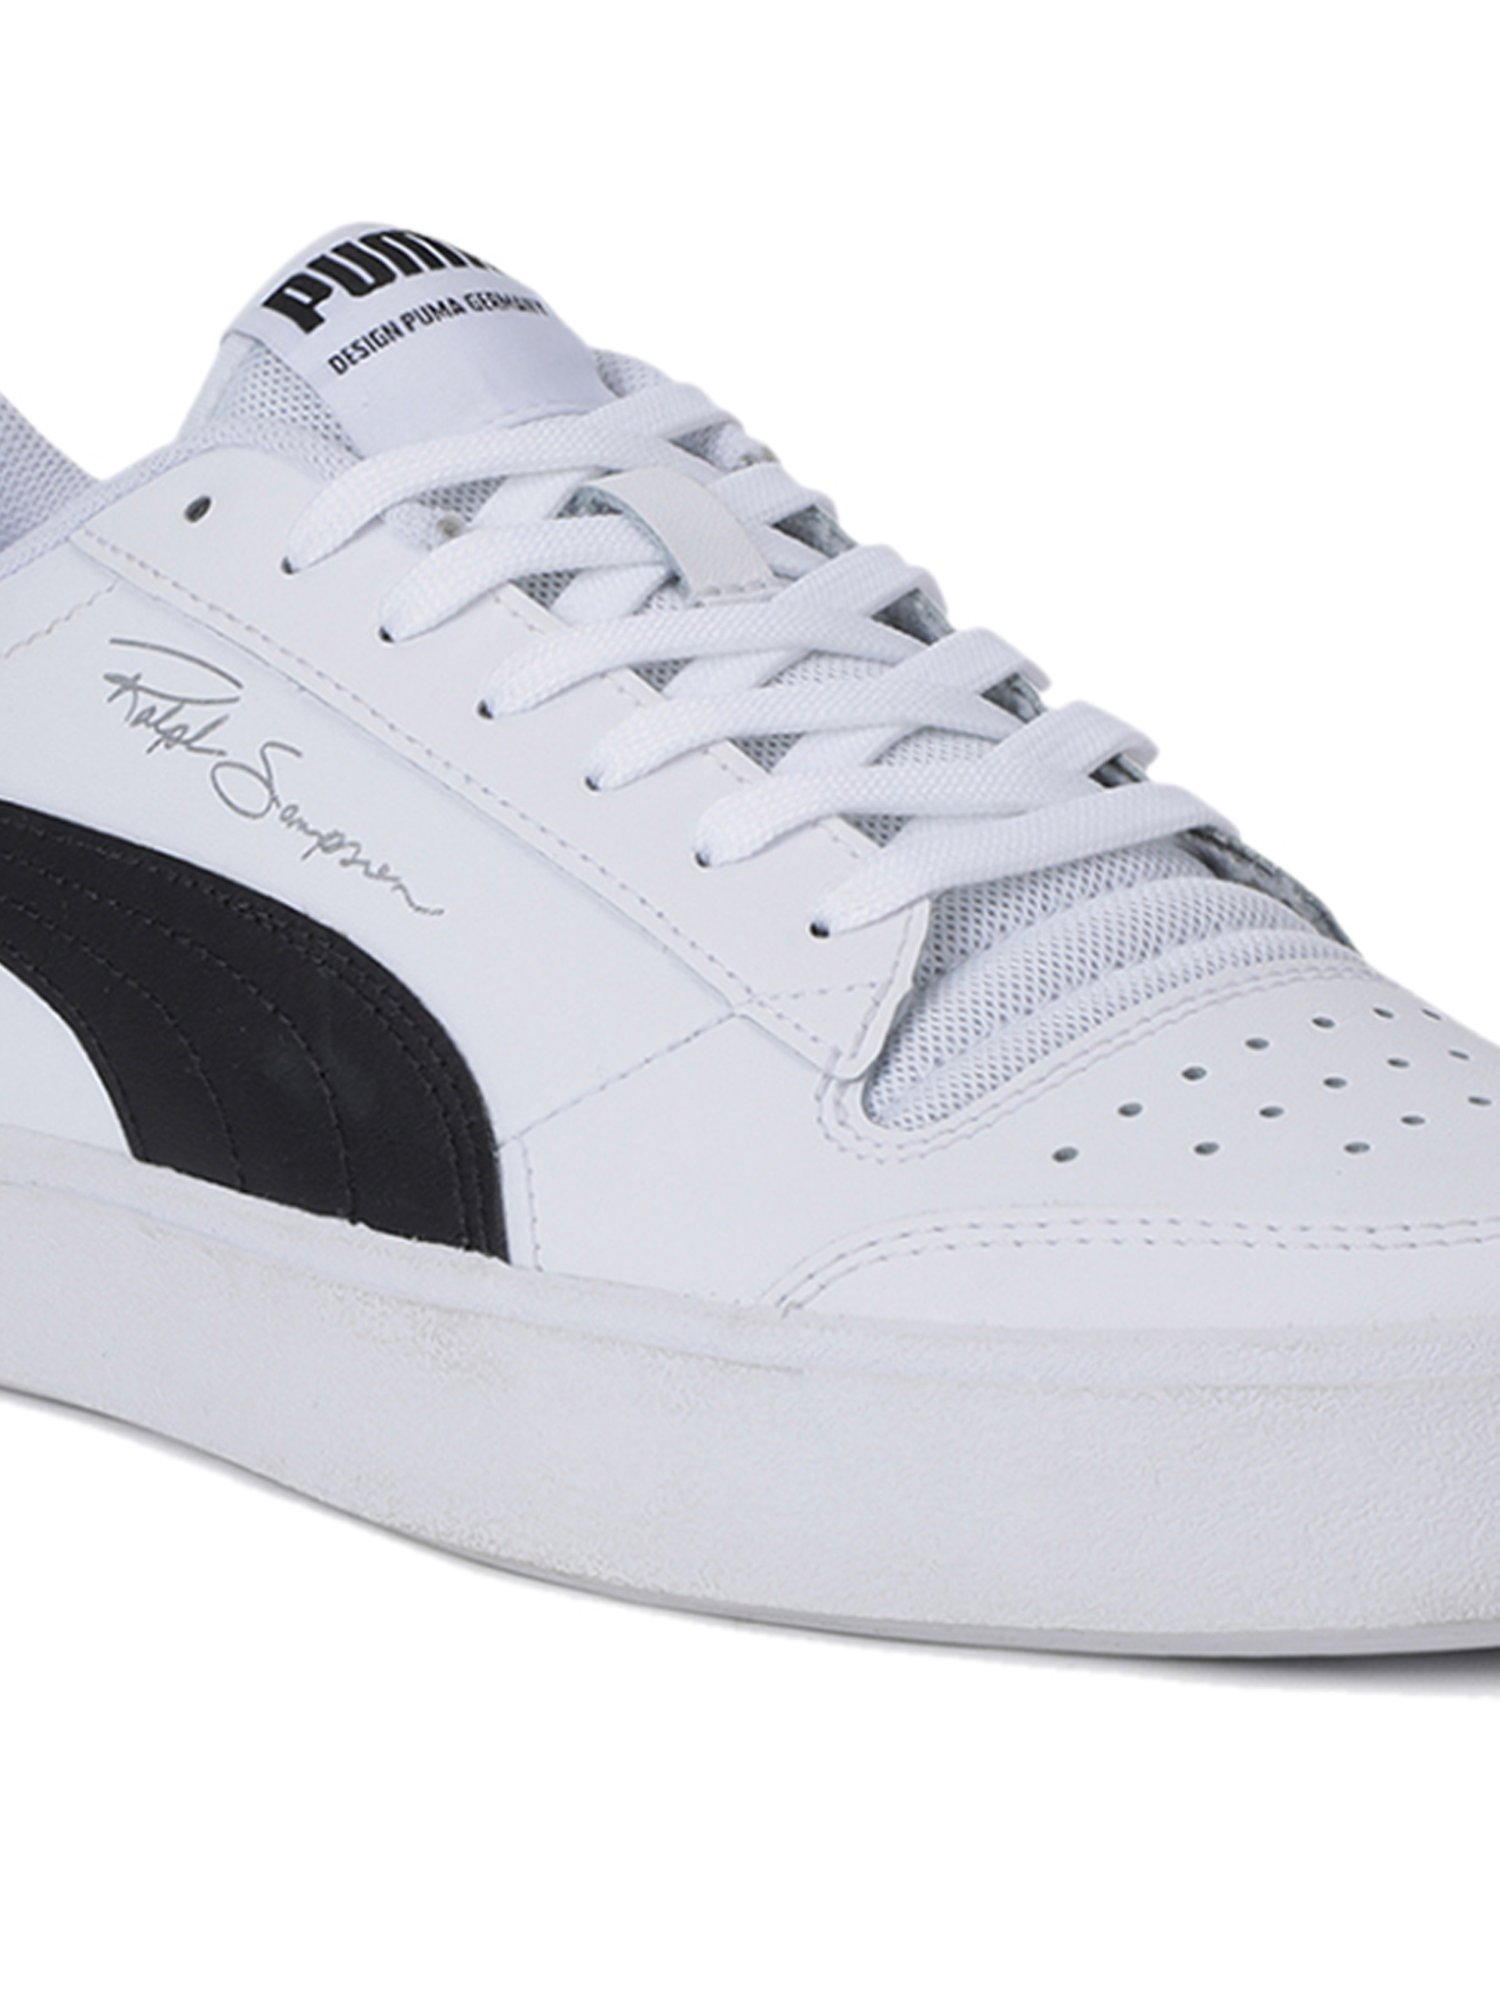 Puma Ralph Sampson Vulc White Sneakers 